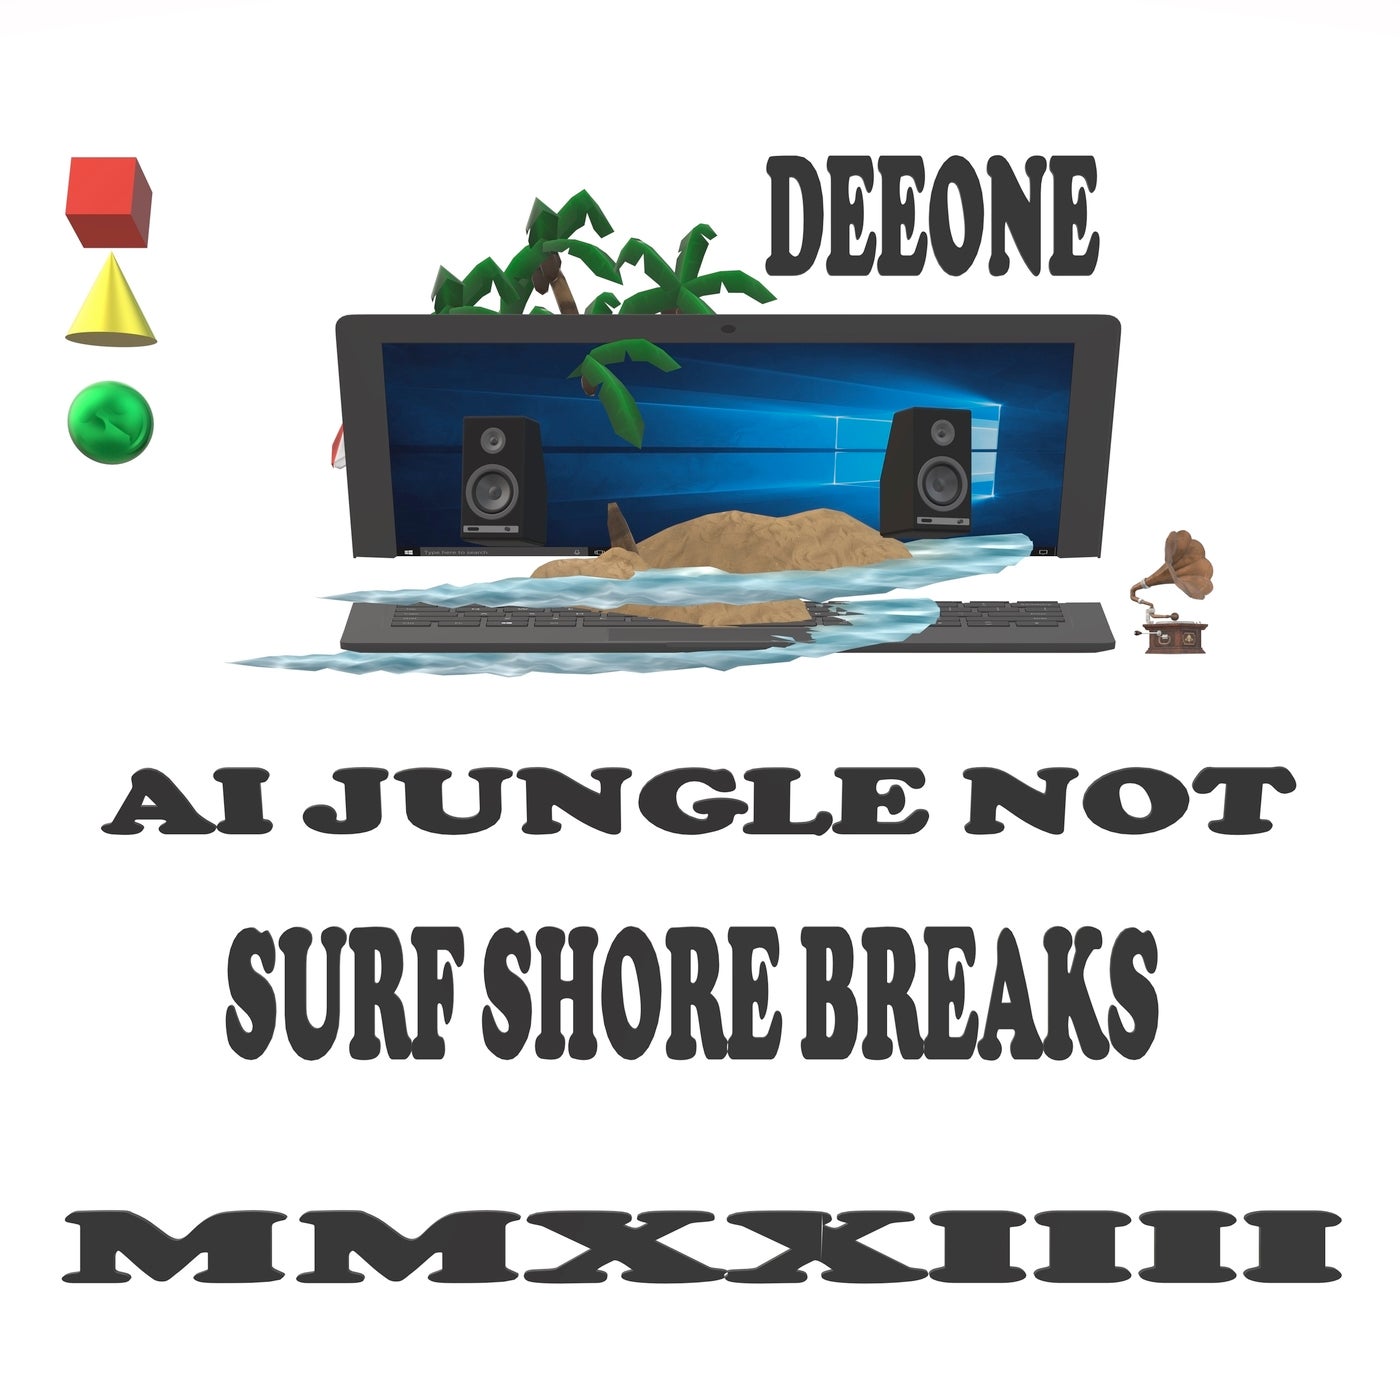 AI Jungle Not Surf Shore Breaks MMXXIIII